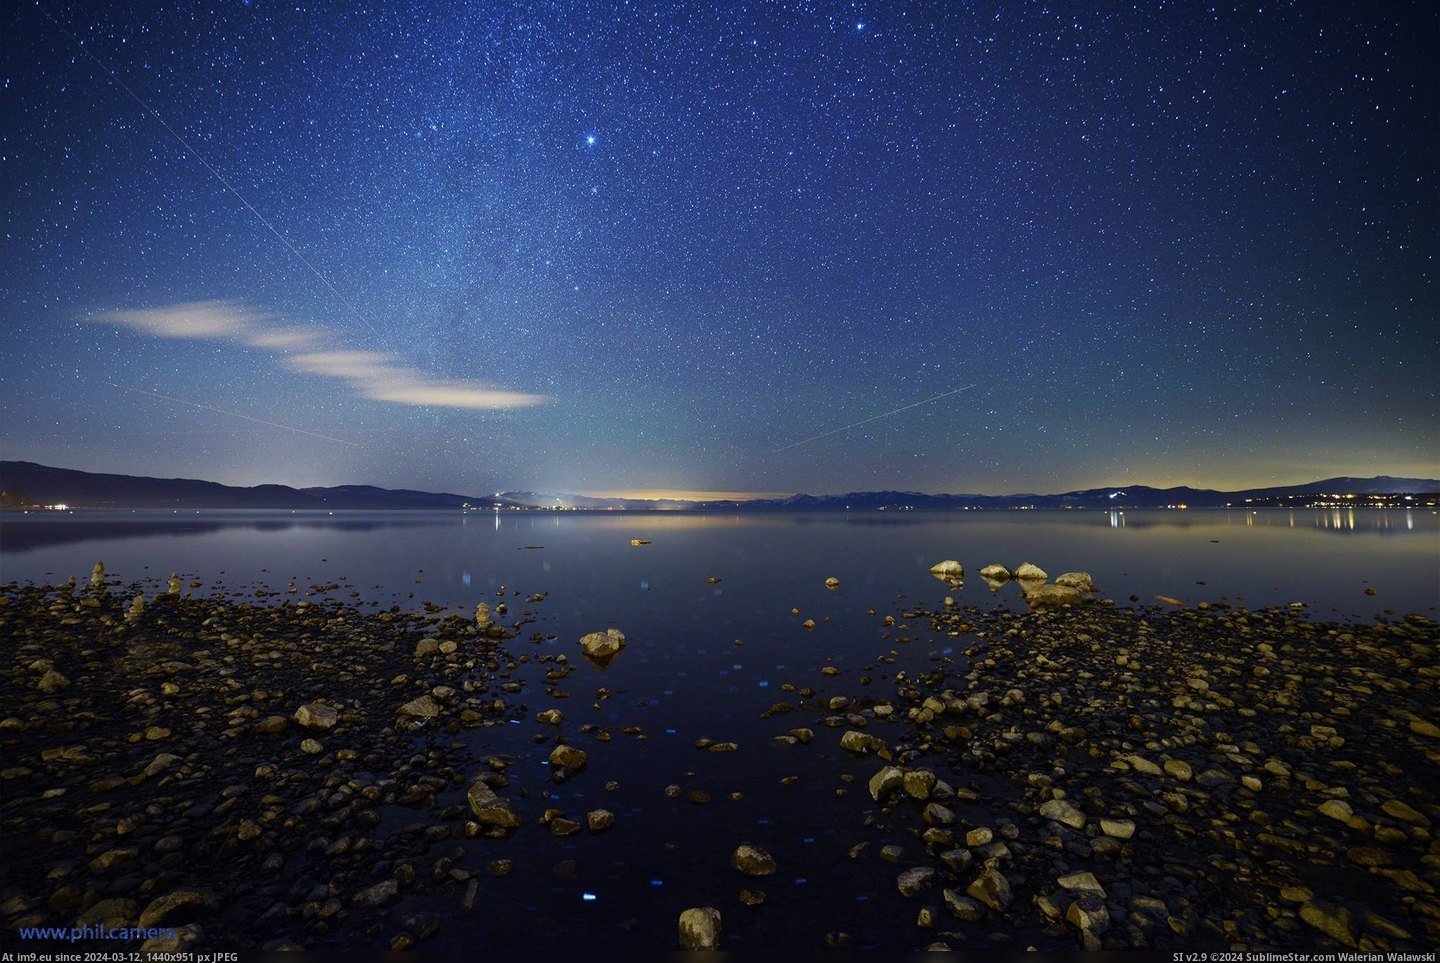 #Night #Lake #North #Interesting #Shore #Waters #Breath #Perfectly #Rocks #Stars #Tahoe [Earthporn] Breath-taking stars, perfectly still waters, and interesting rocks on the North Shore of Lake Tahoe last night [oc b Pic. (Изображение из альбом My r/EARTHPORN favs))